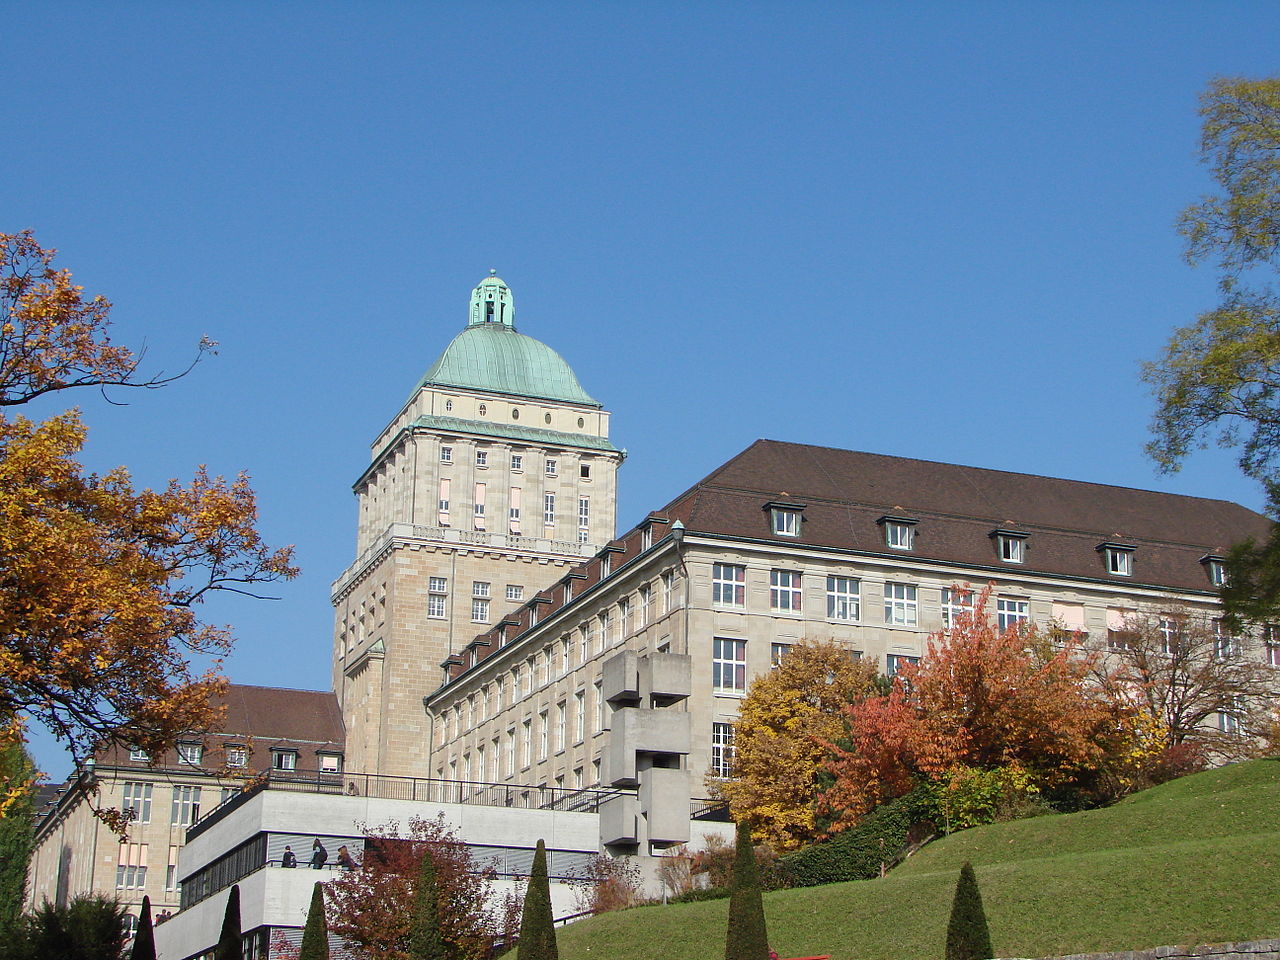  Swiss Federal Institute of Technology Zurich